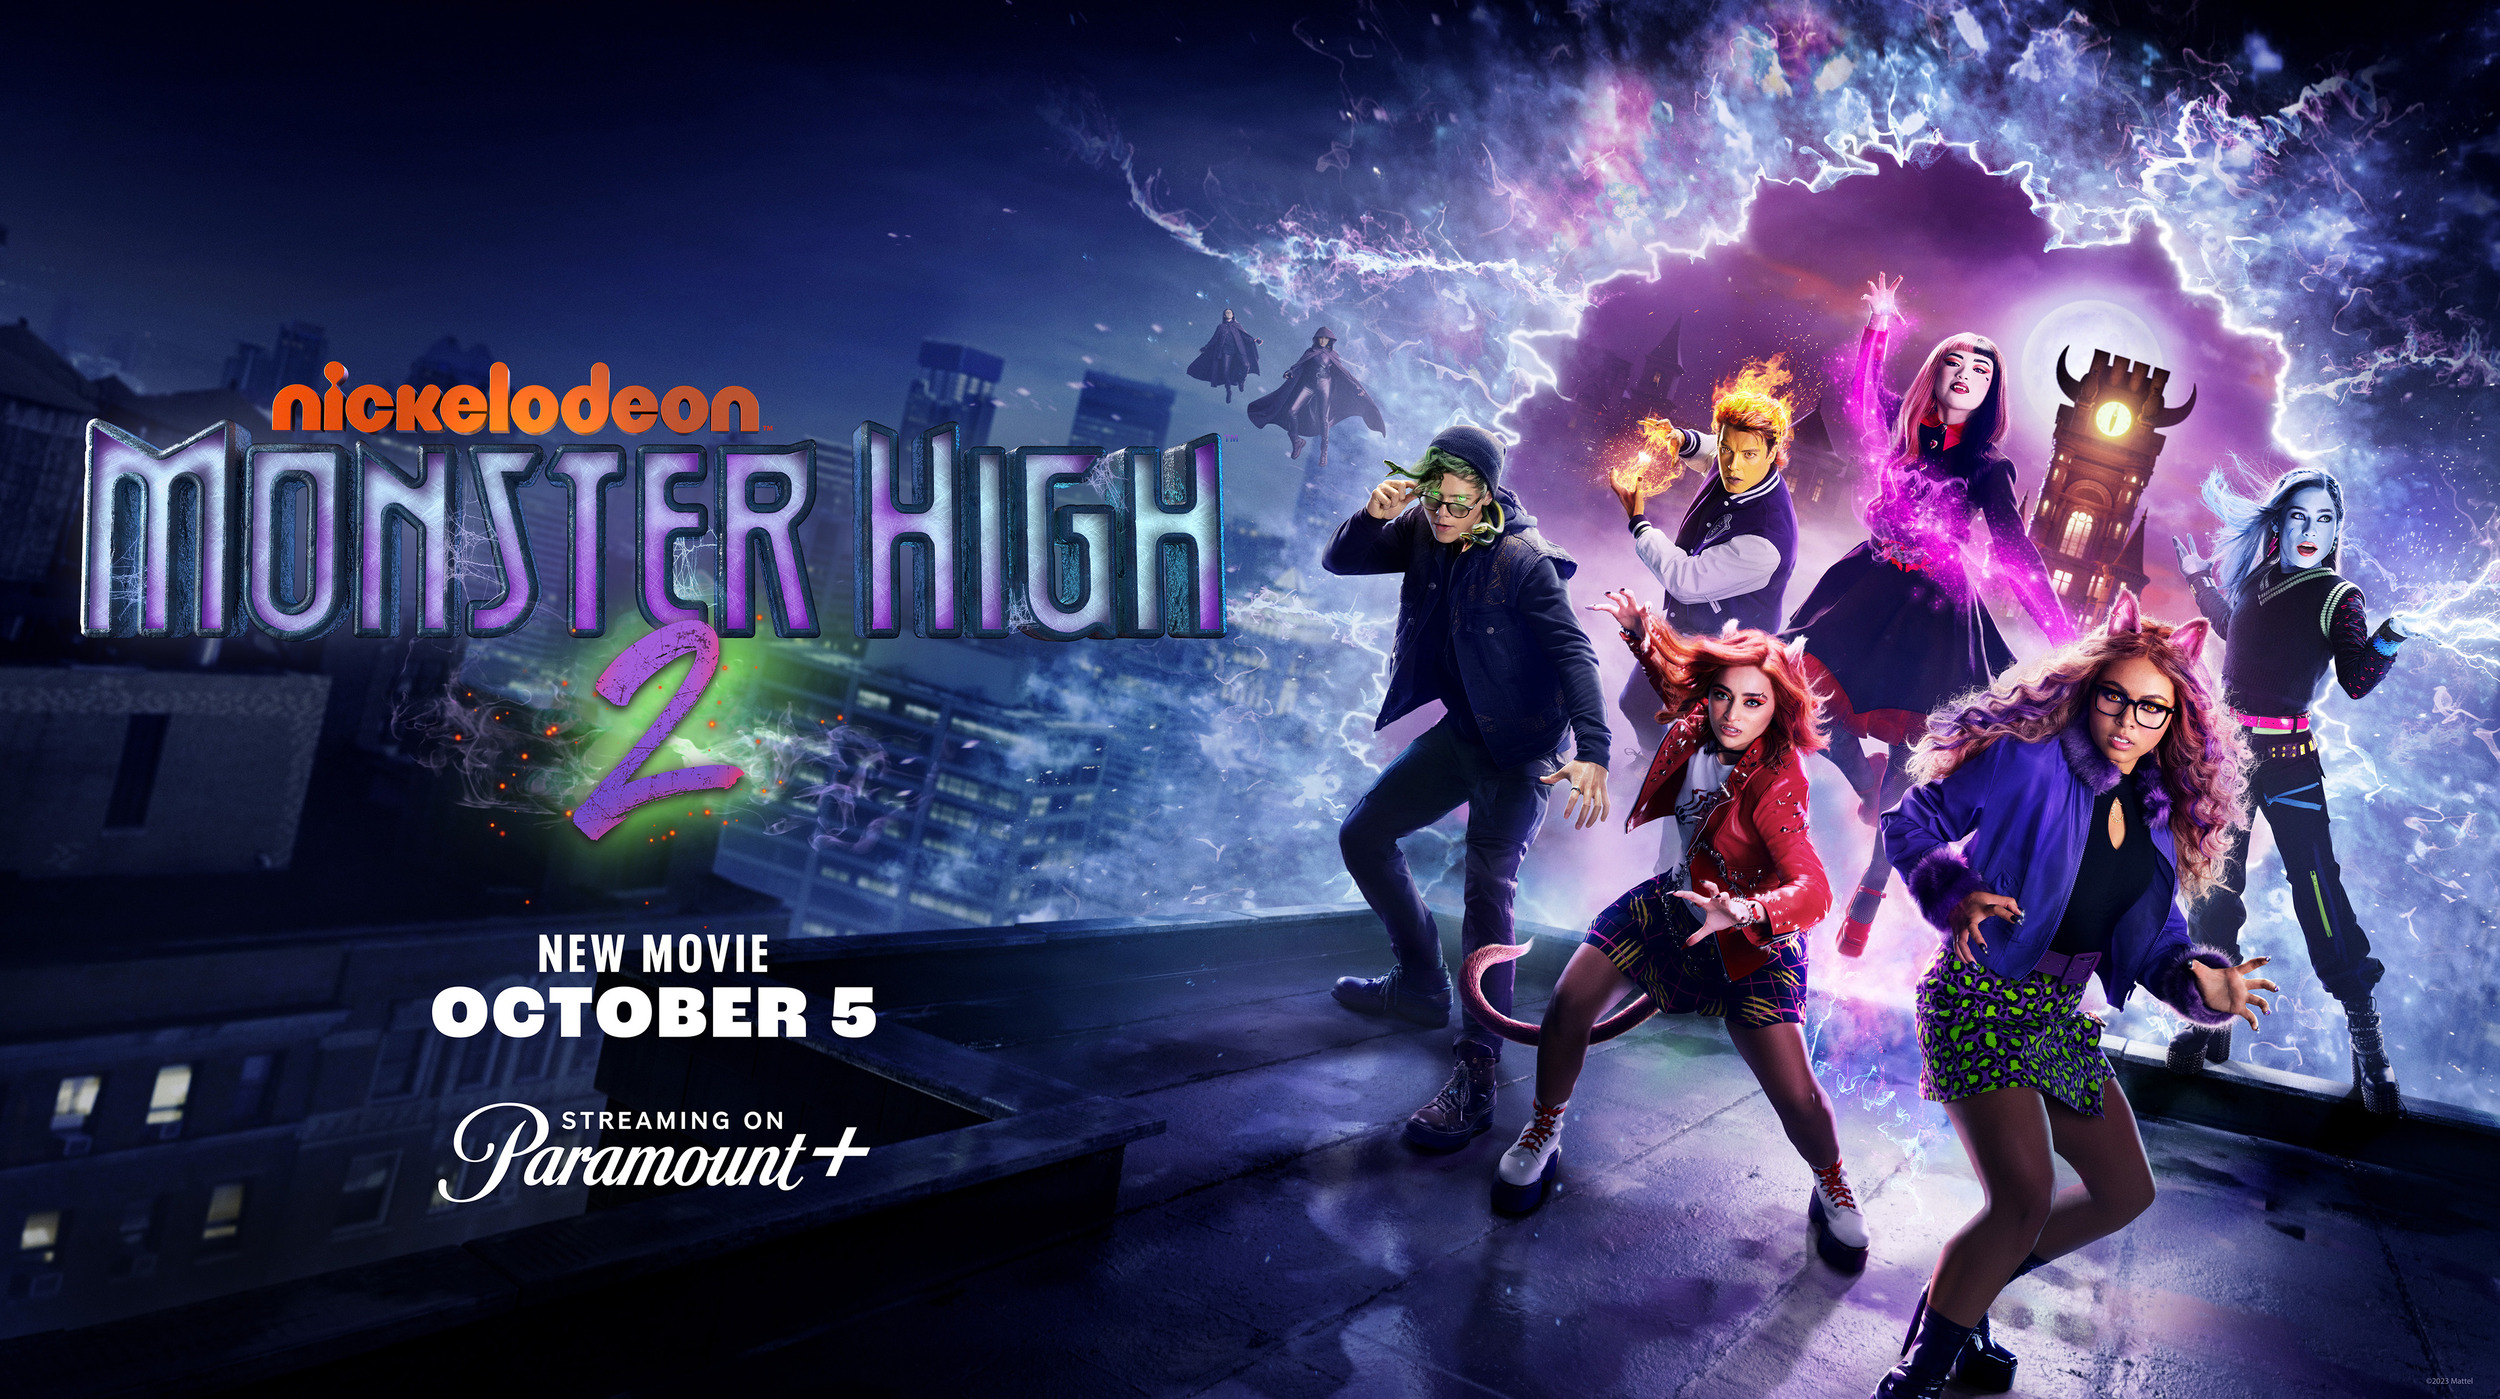 Mega Sized Movie Poster Image for Monster High 2 (#2 of 2)